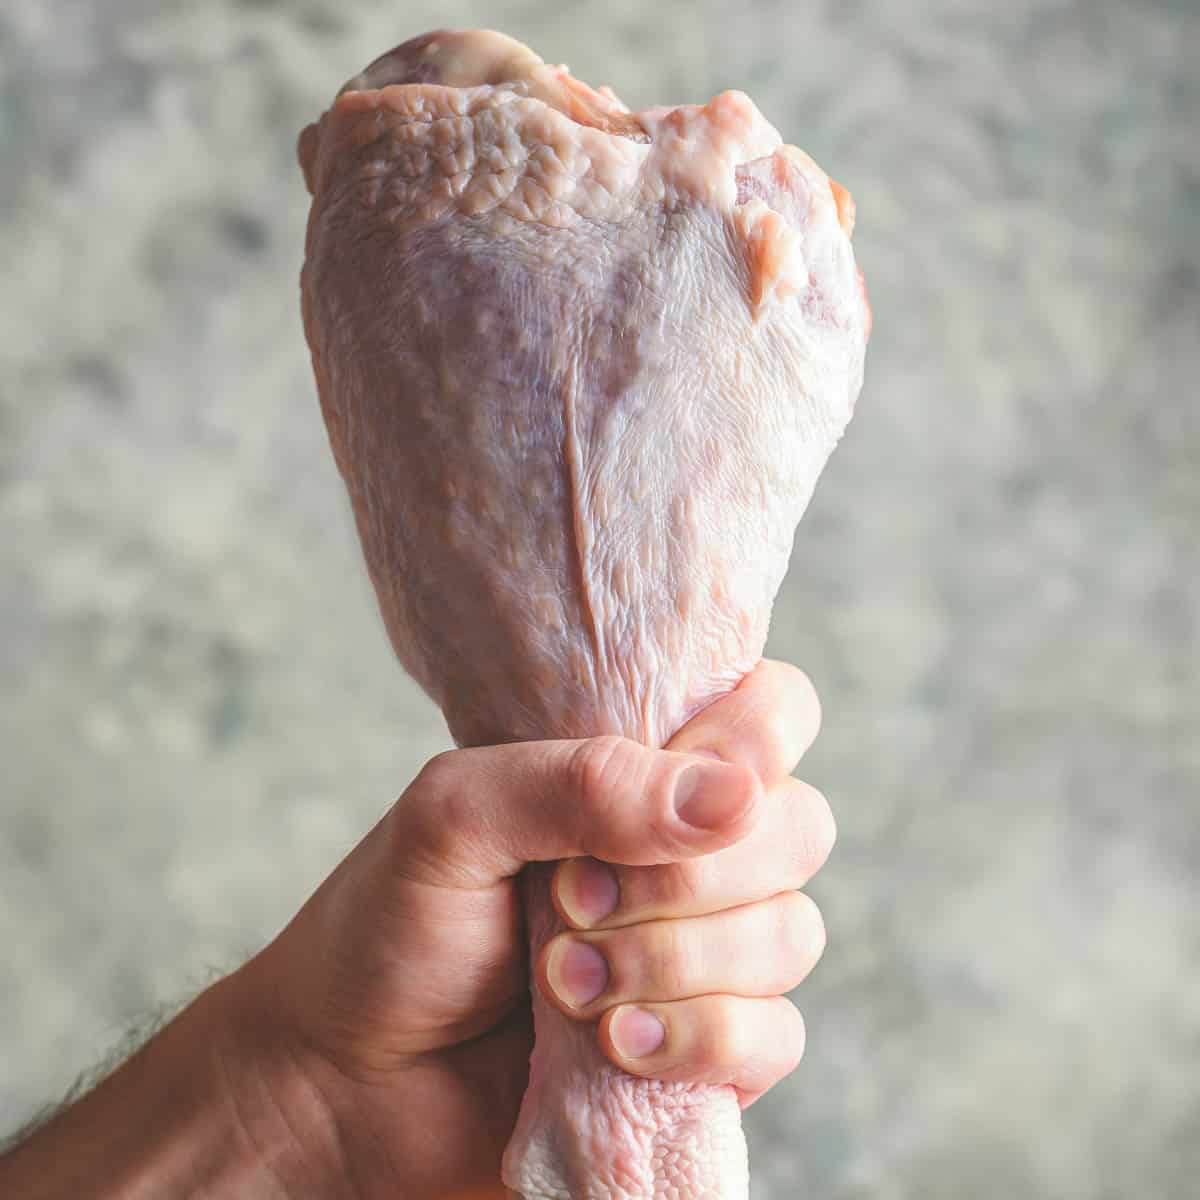 holding a turkey leg straight up